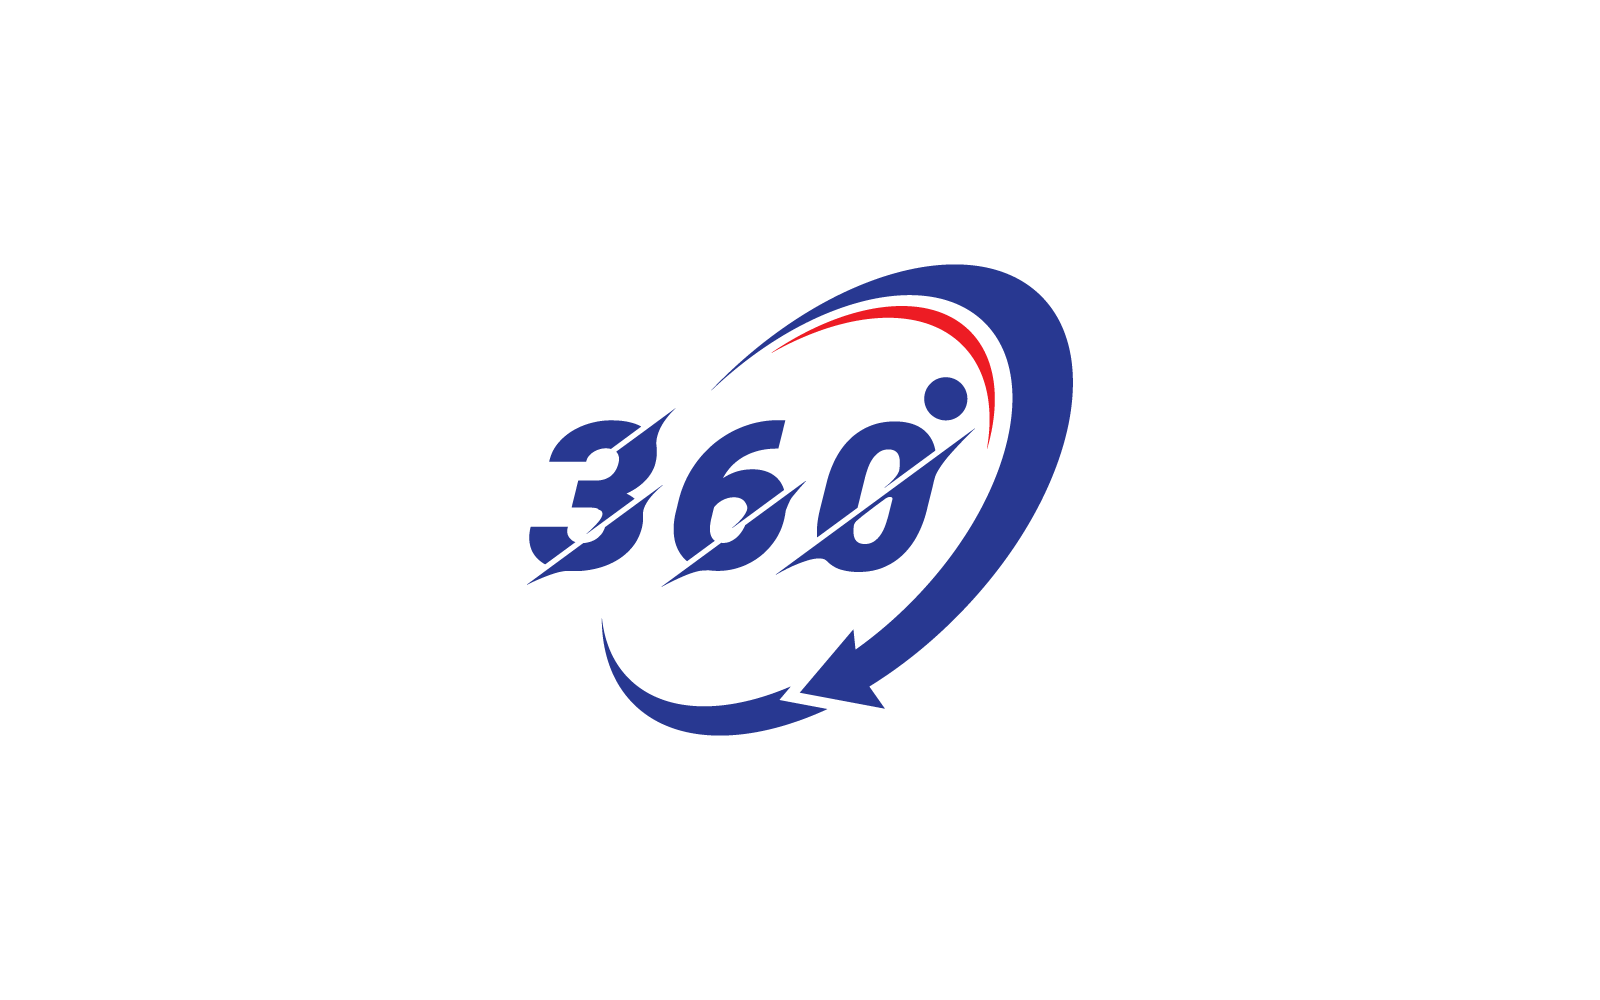 360 view logo vector flat design template Logo Template